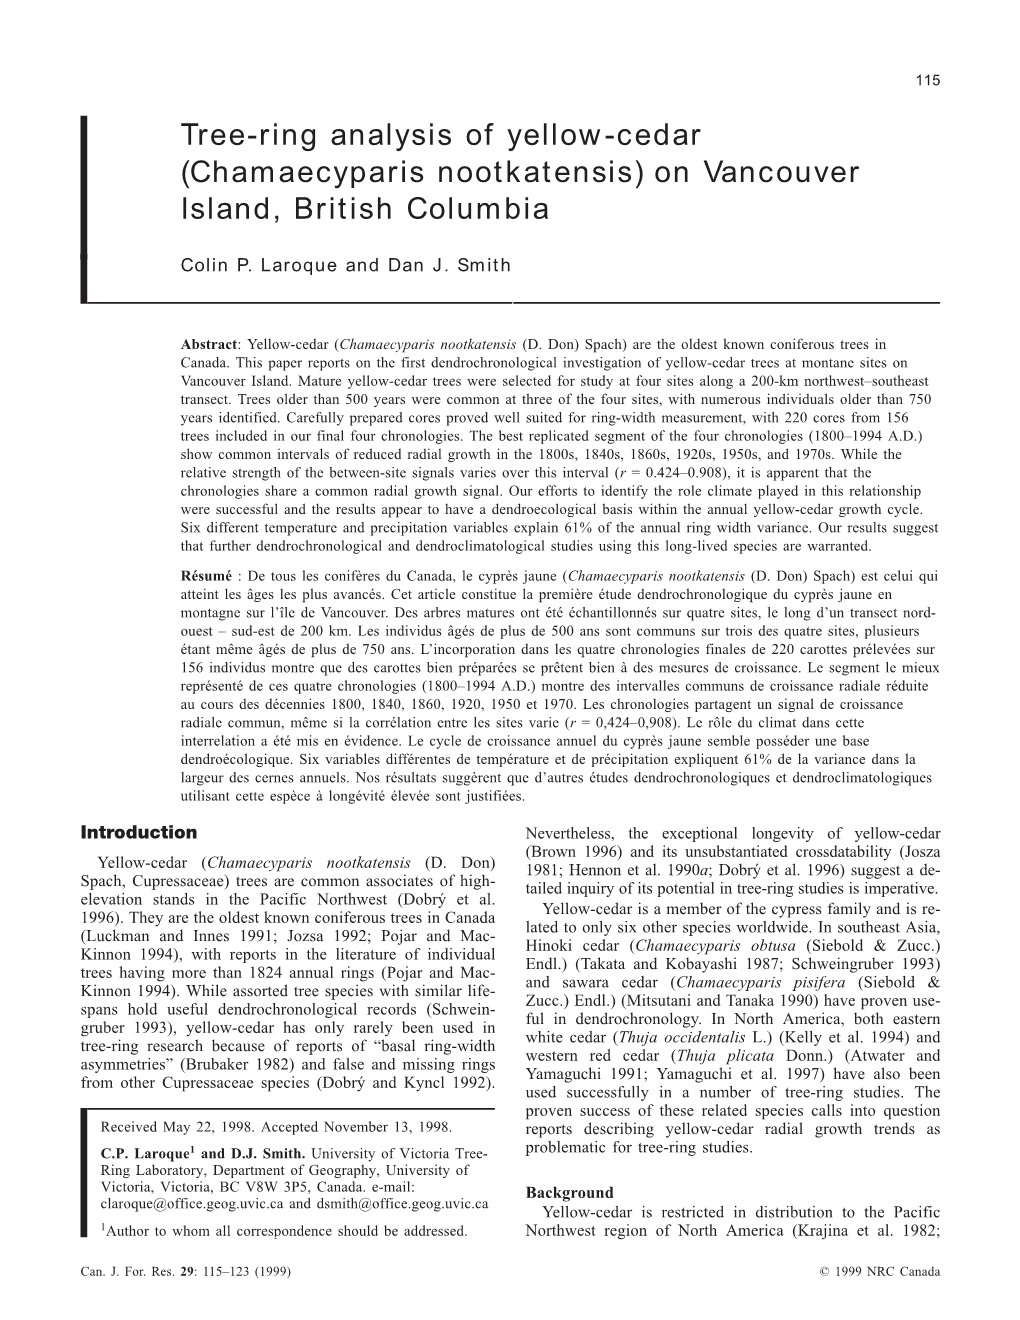 Tree-Ring Analysis of Yellow-Cedar (Chamaecyparis Nootkatensis) on Vancouver Island, British Columbia